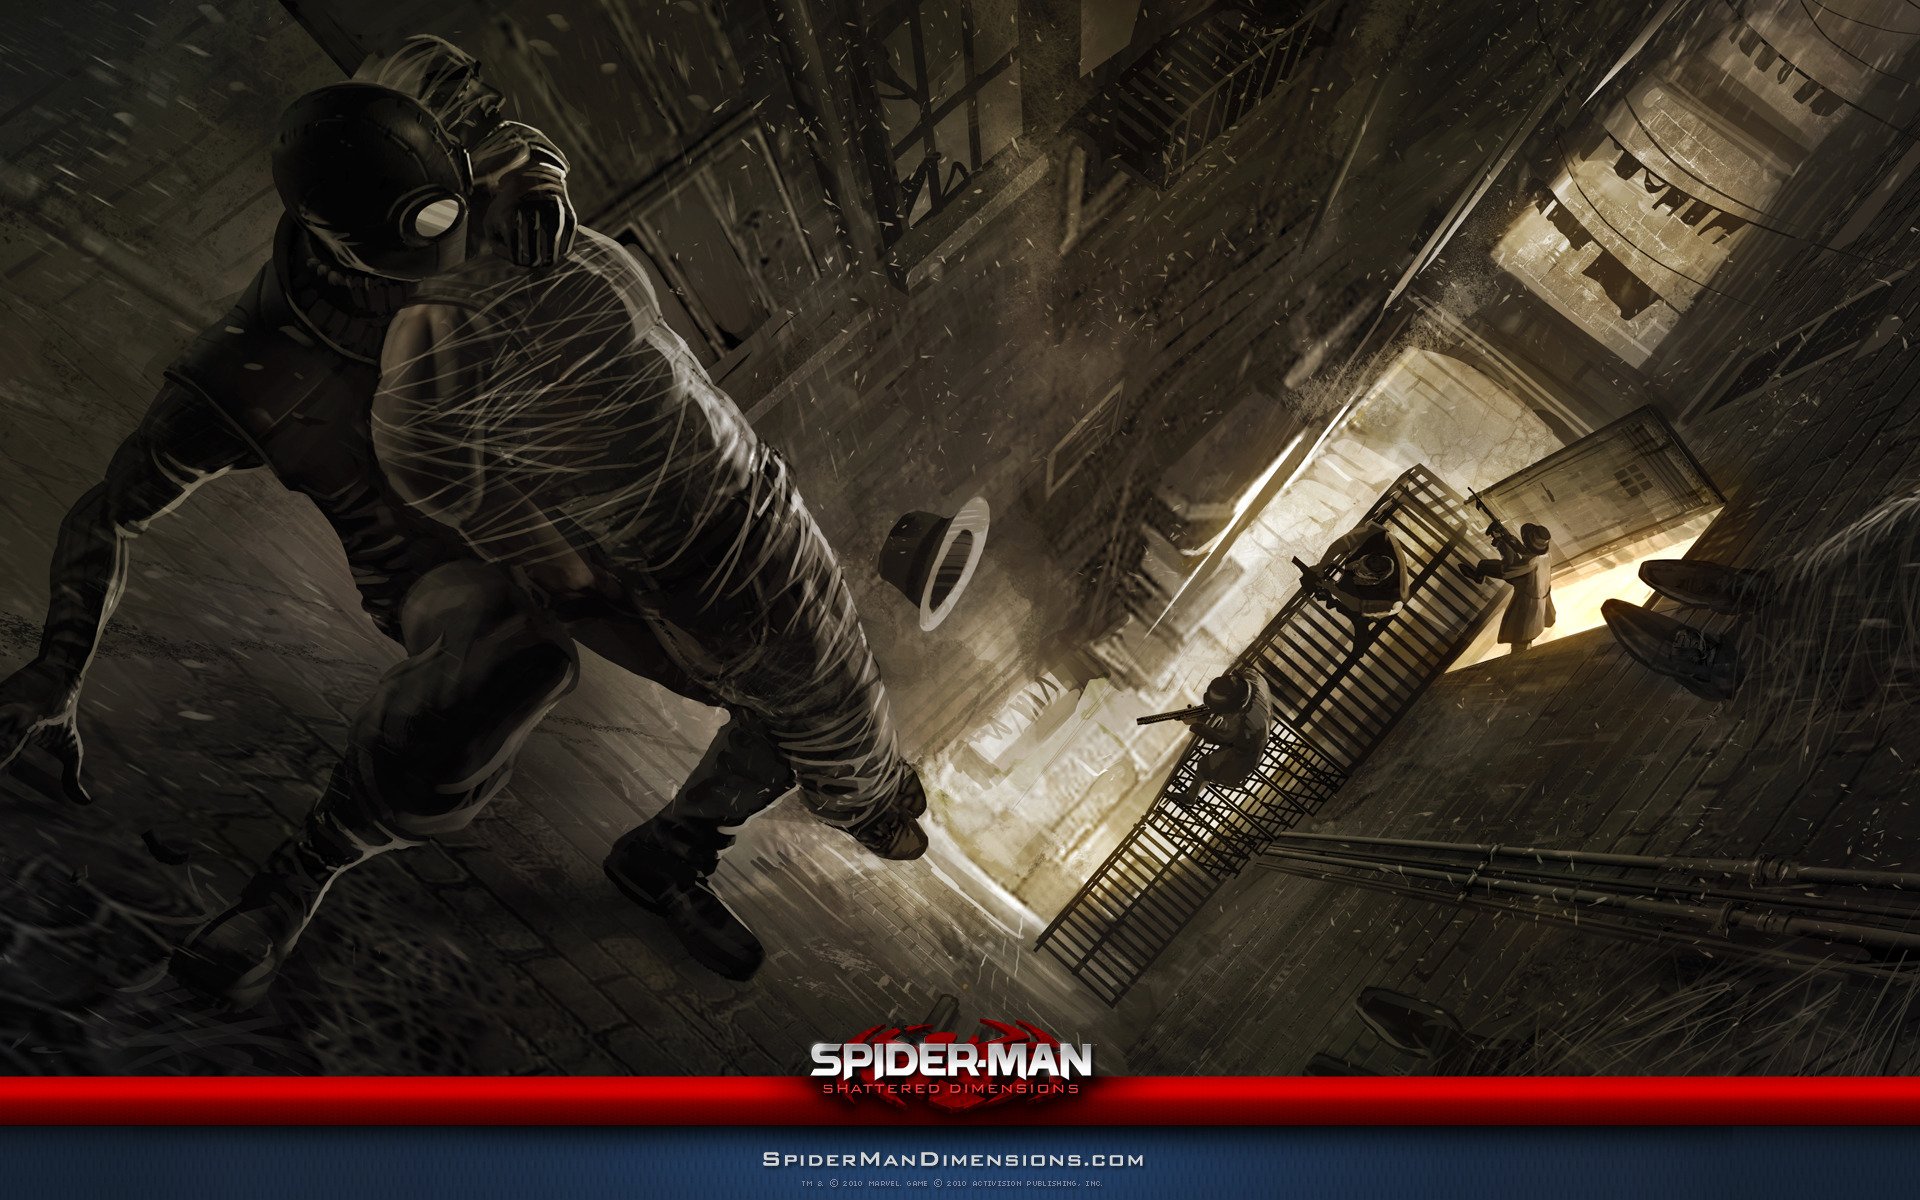 spider man, Shattered, Dimensions, Action, Adventure, Superhero, Platform, Stealth, Spiderman, Spider, Fighting Wallpaper